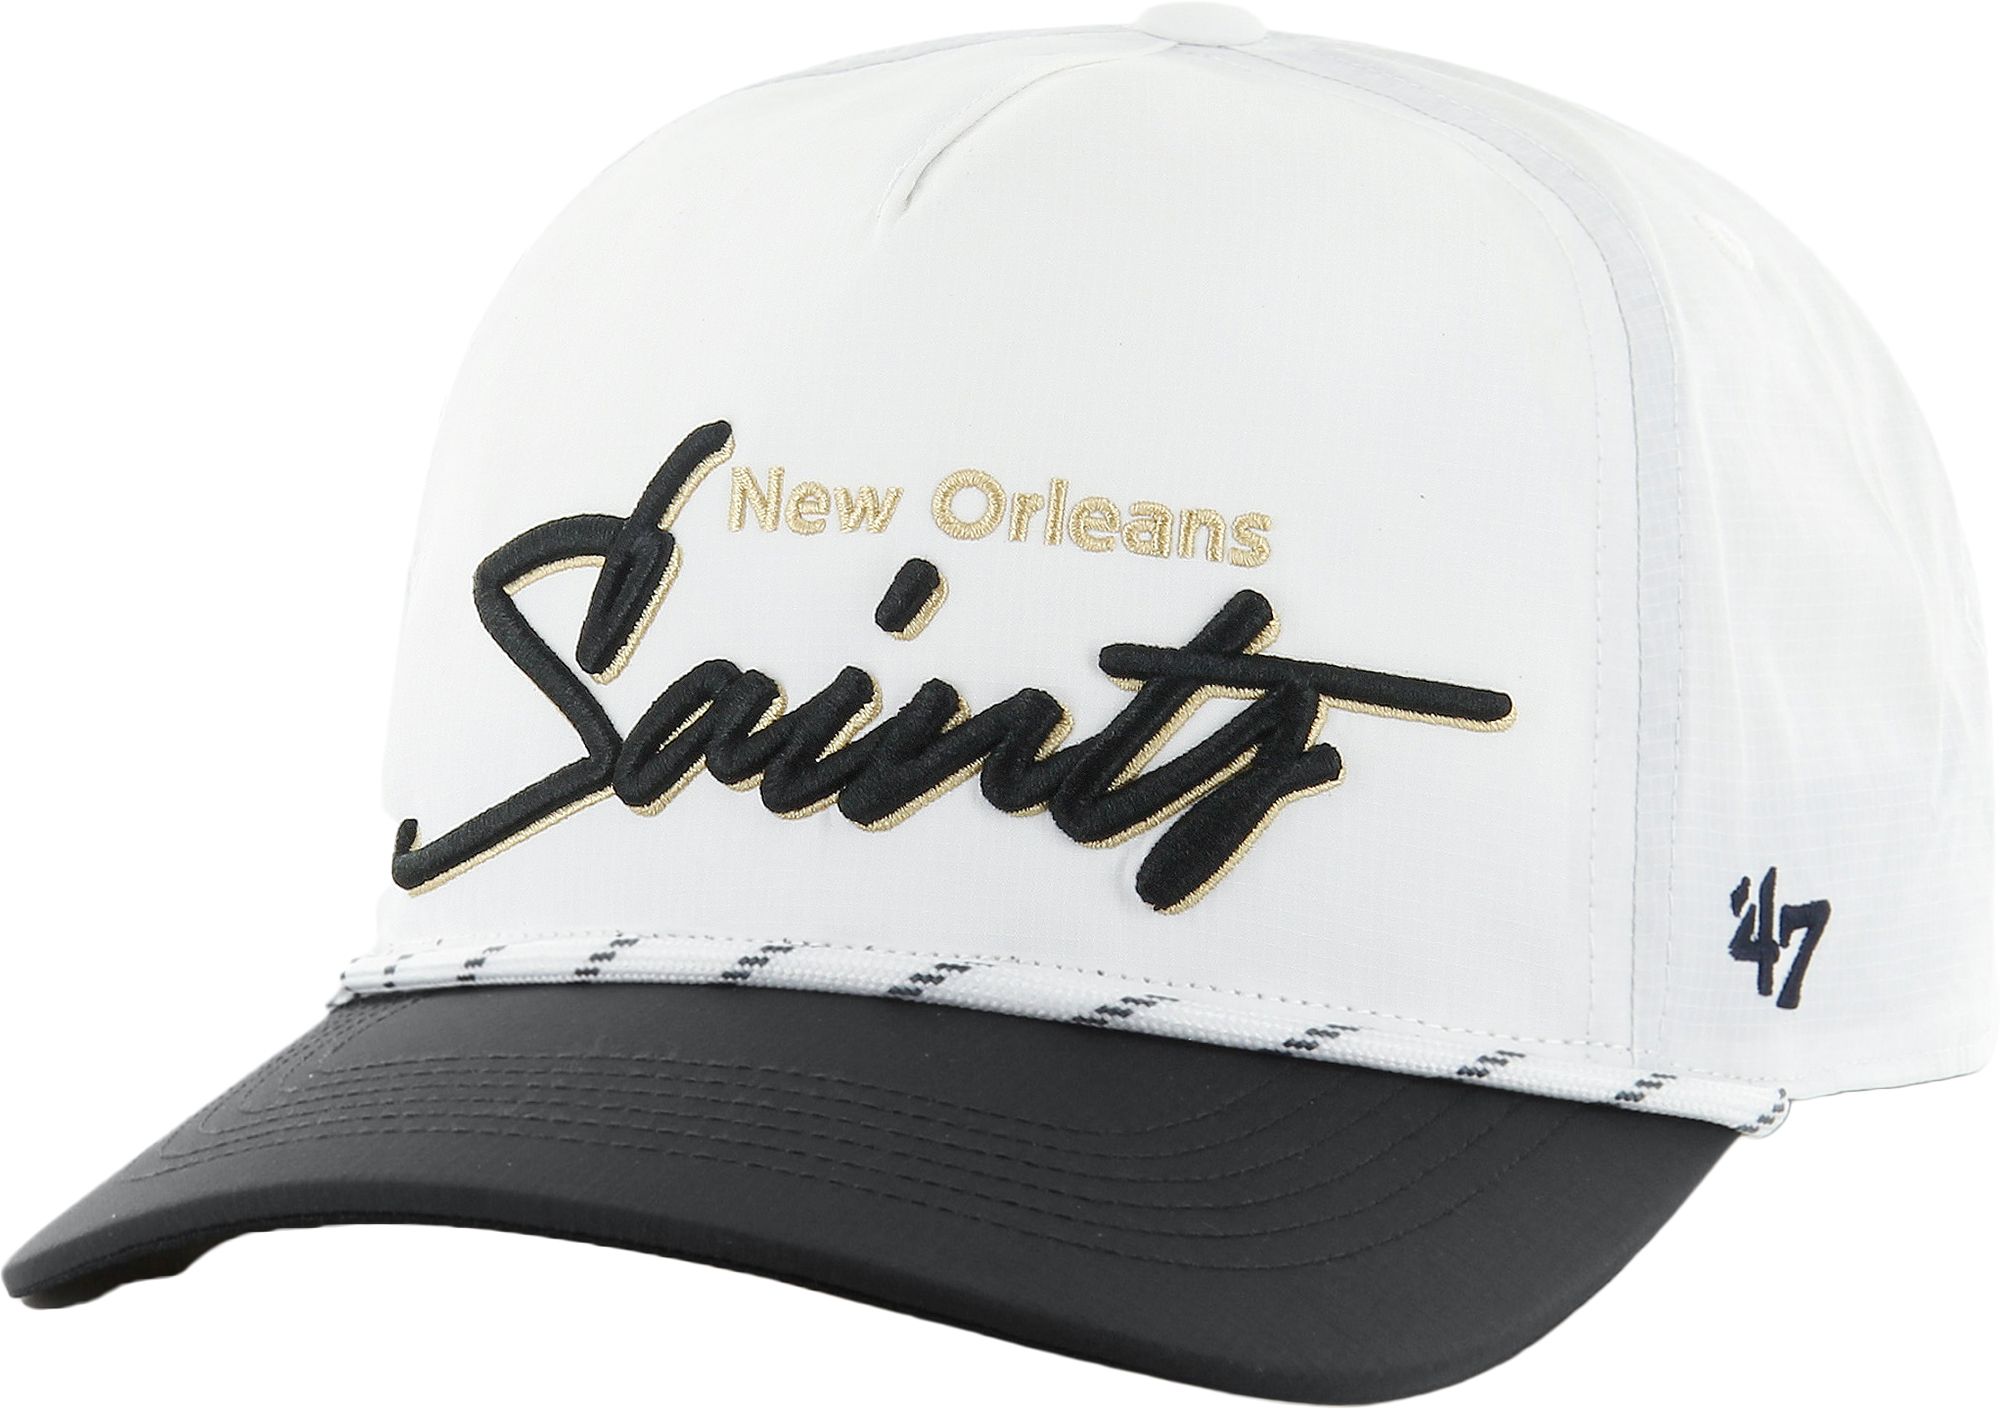 New Orleans Saints snapback curved-brim cap